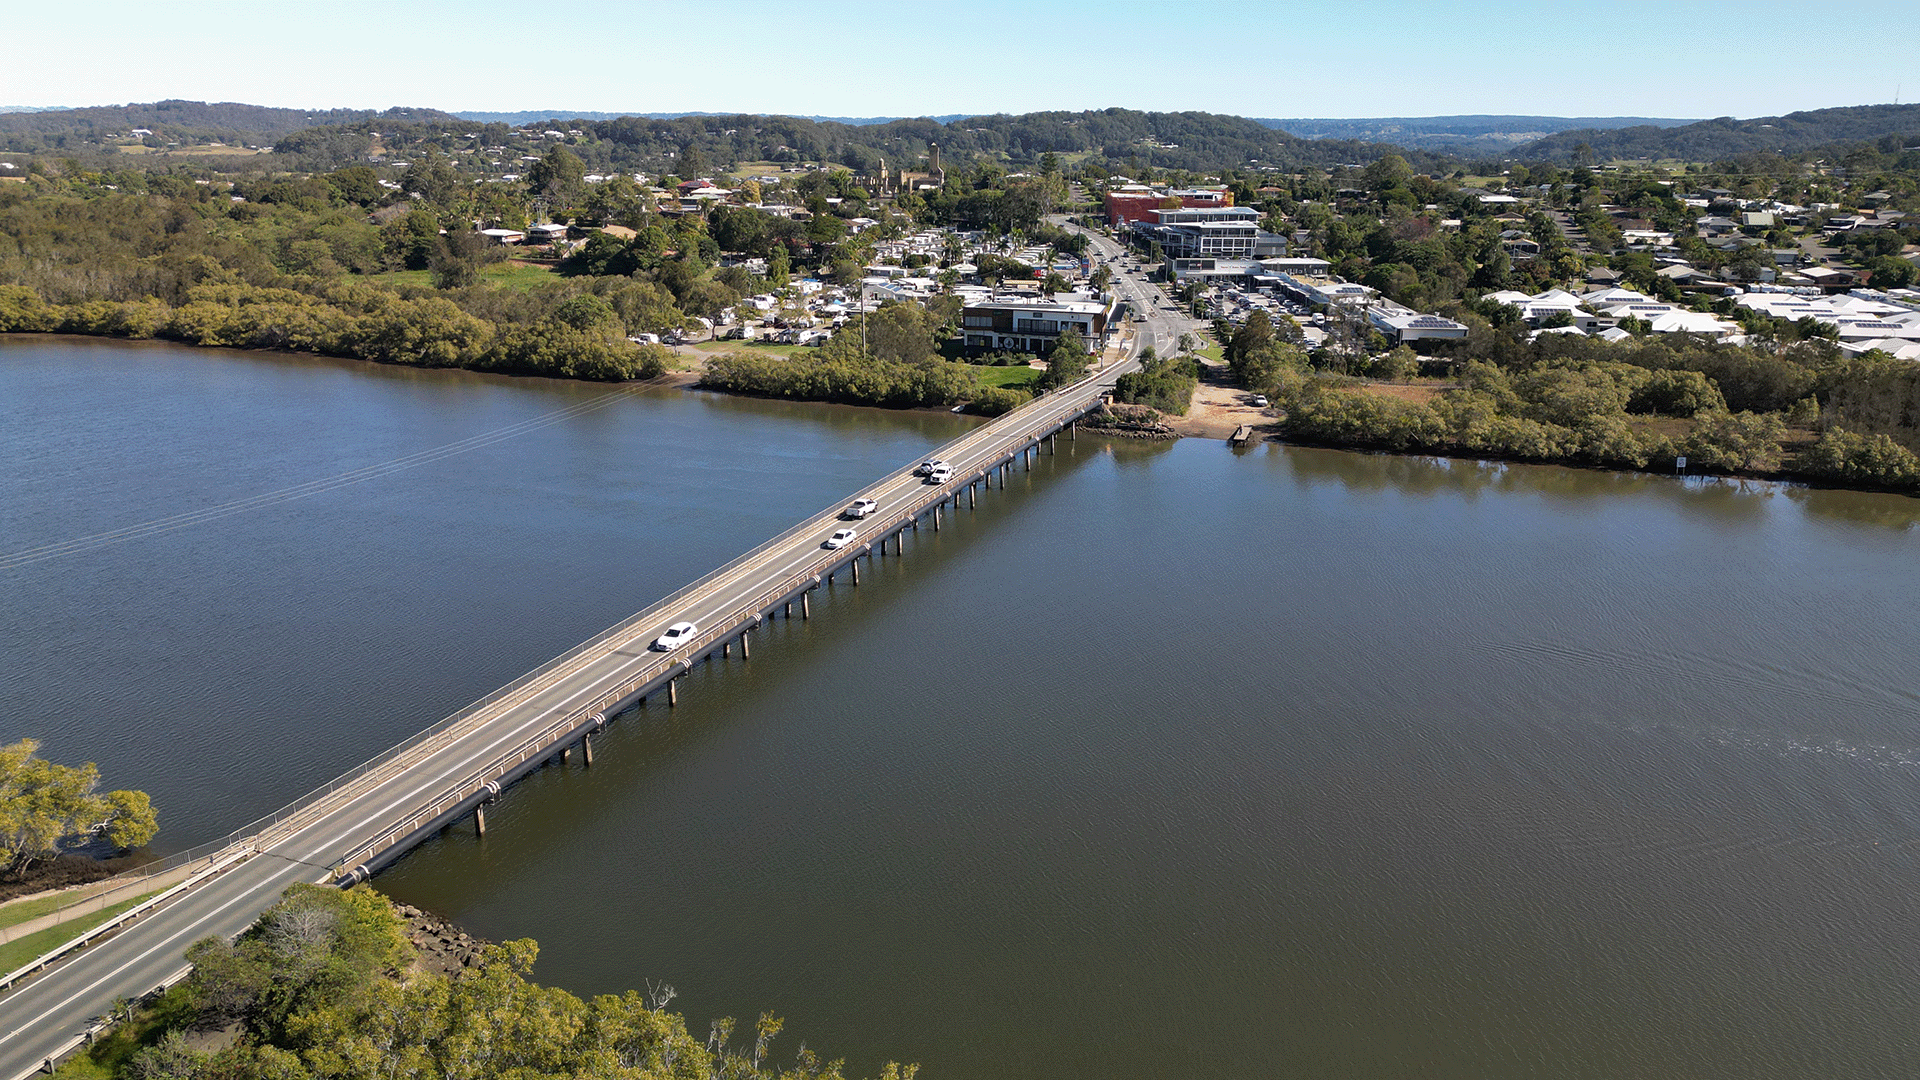 Aerial view of Bli Bli Bridge